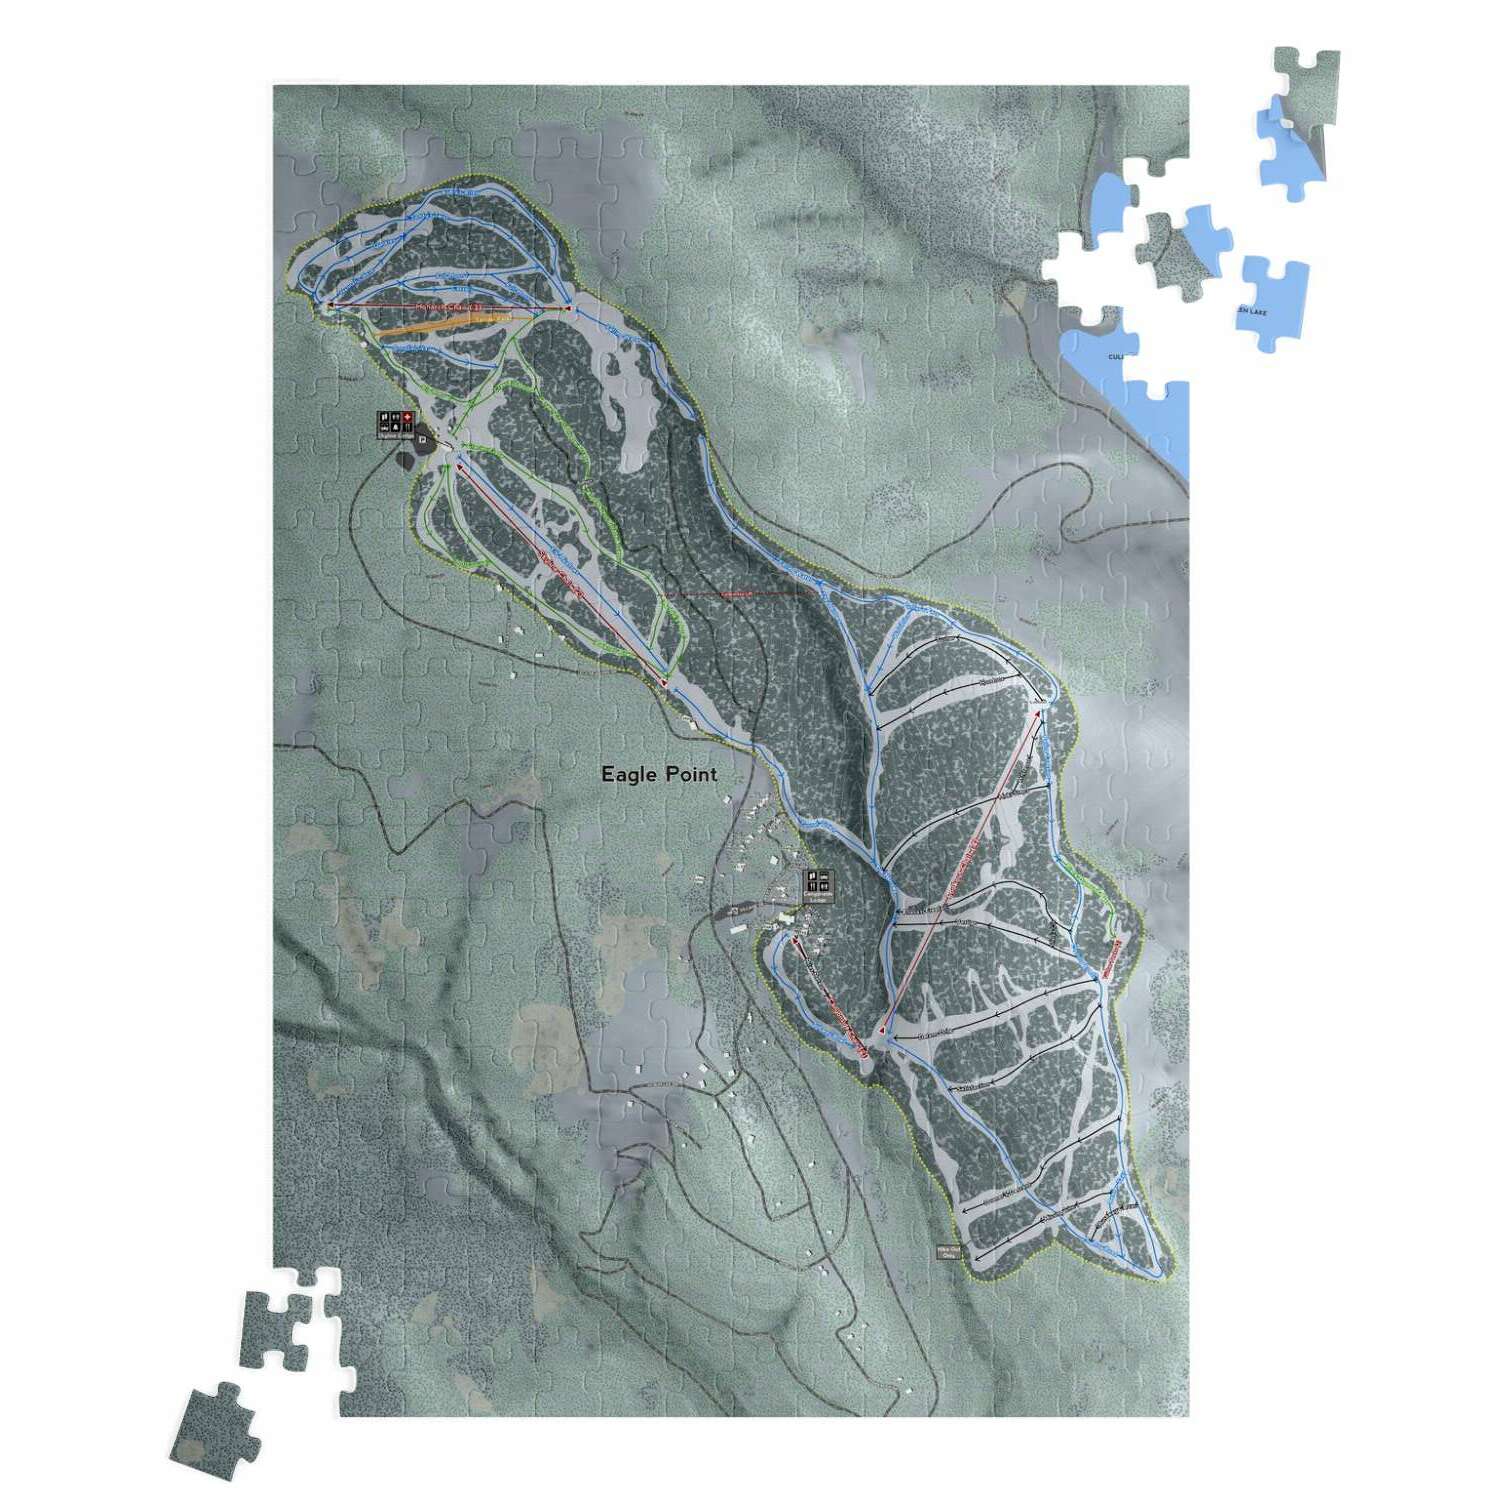 Eagle Point, Utah Ski Trail Map Puzzle - Powderaddicts